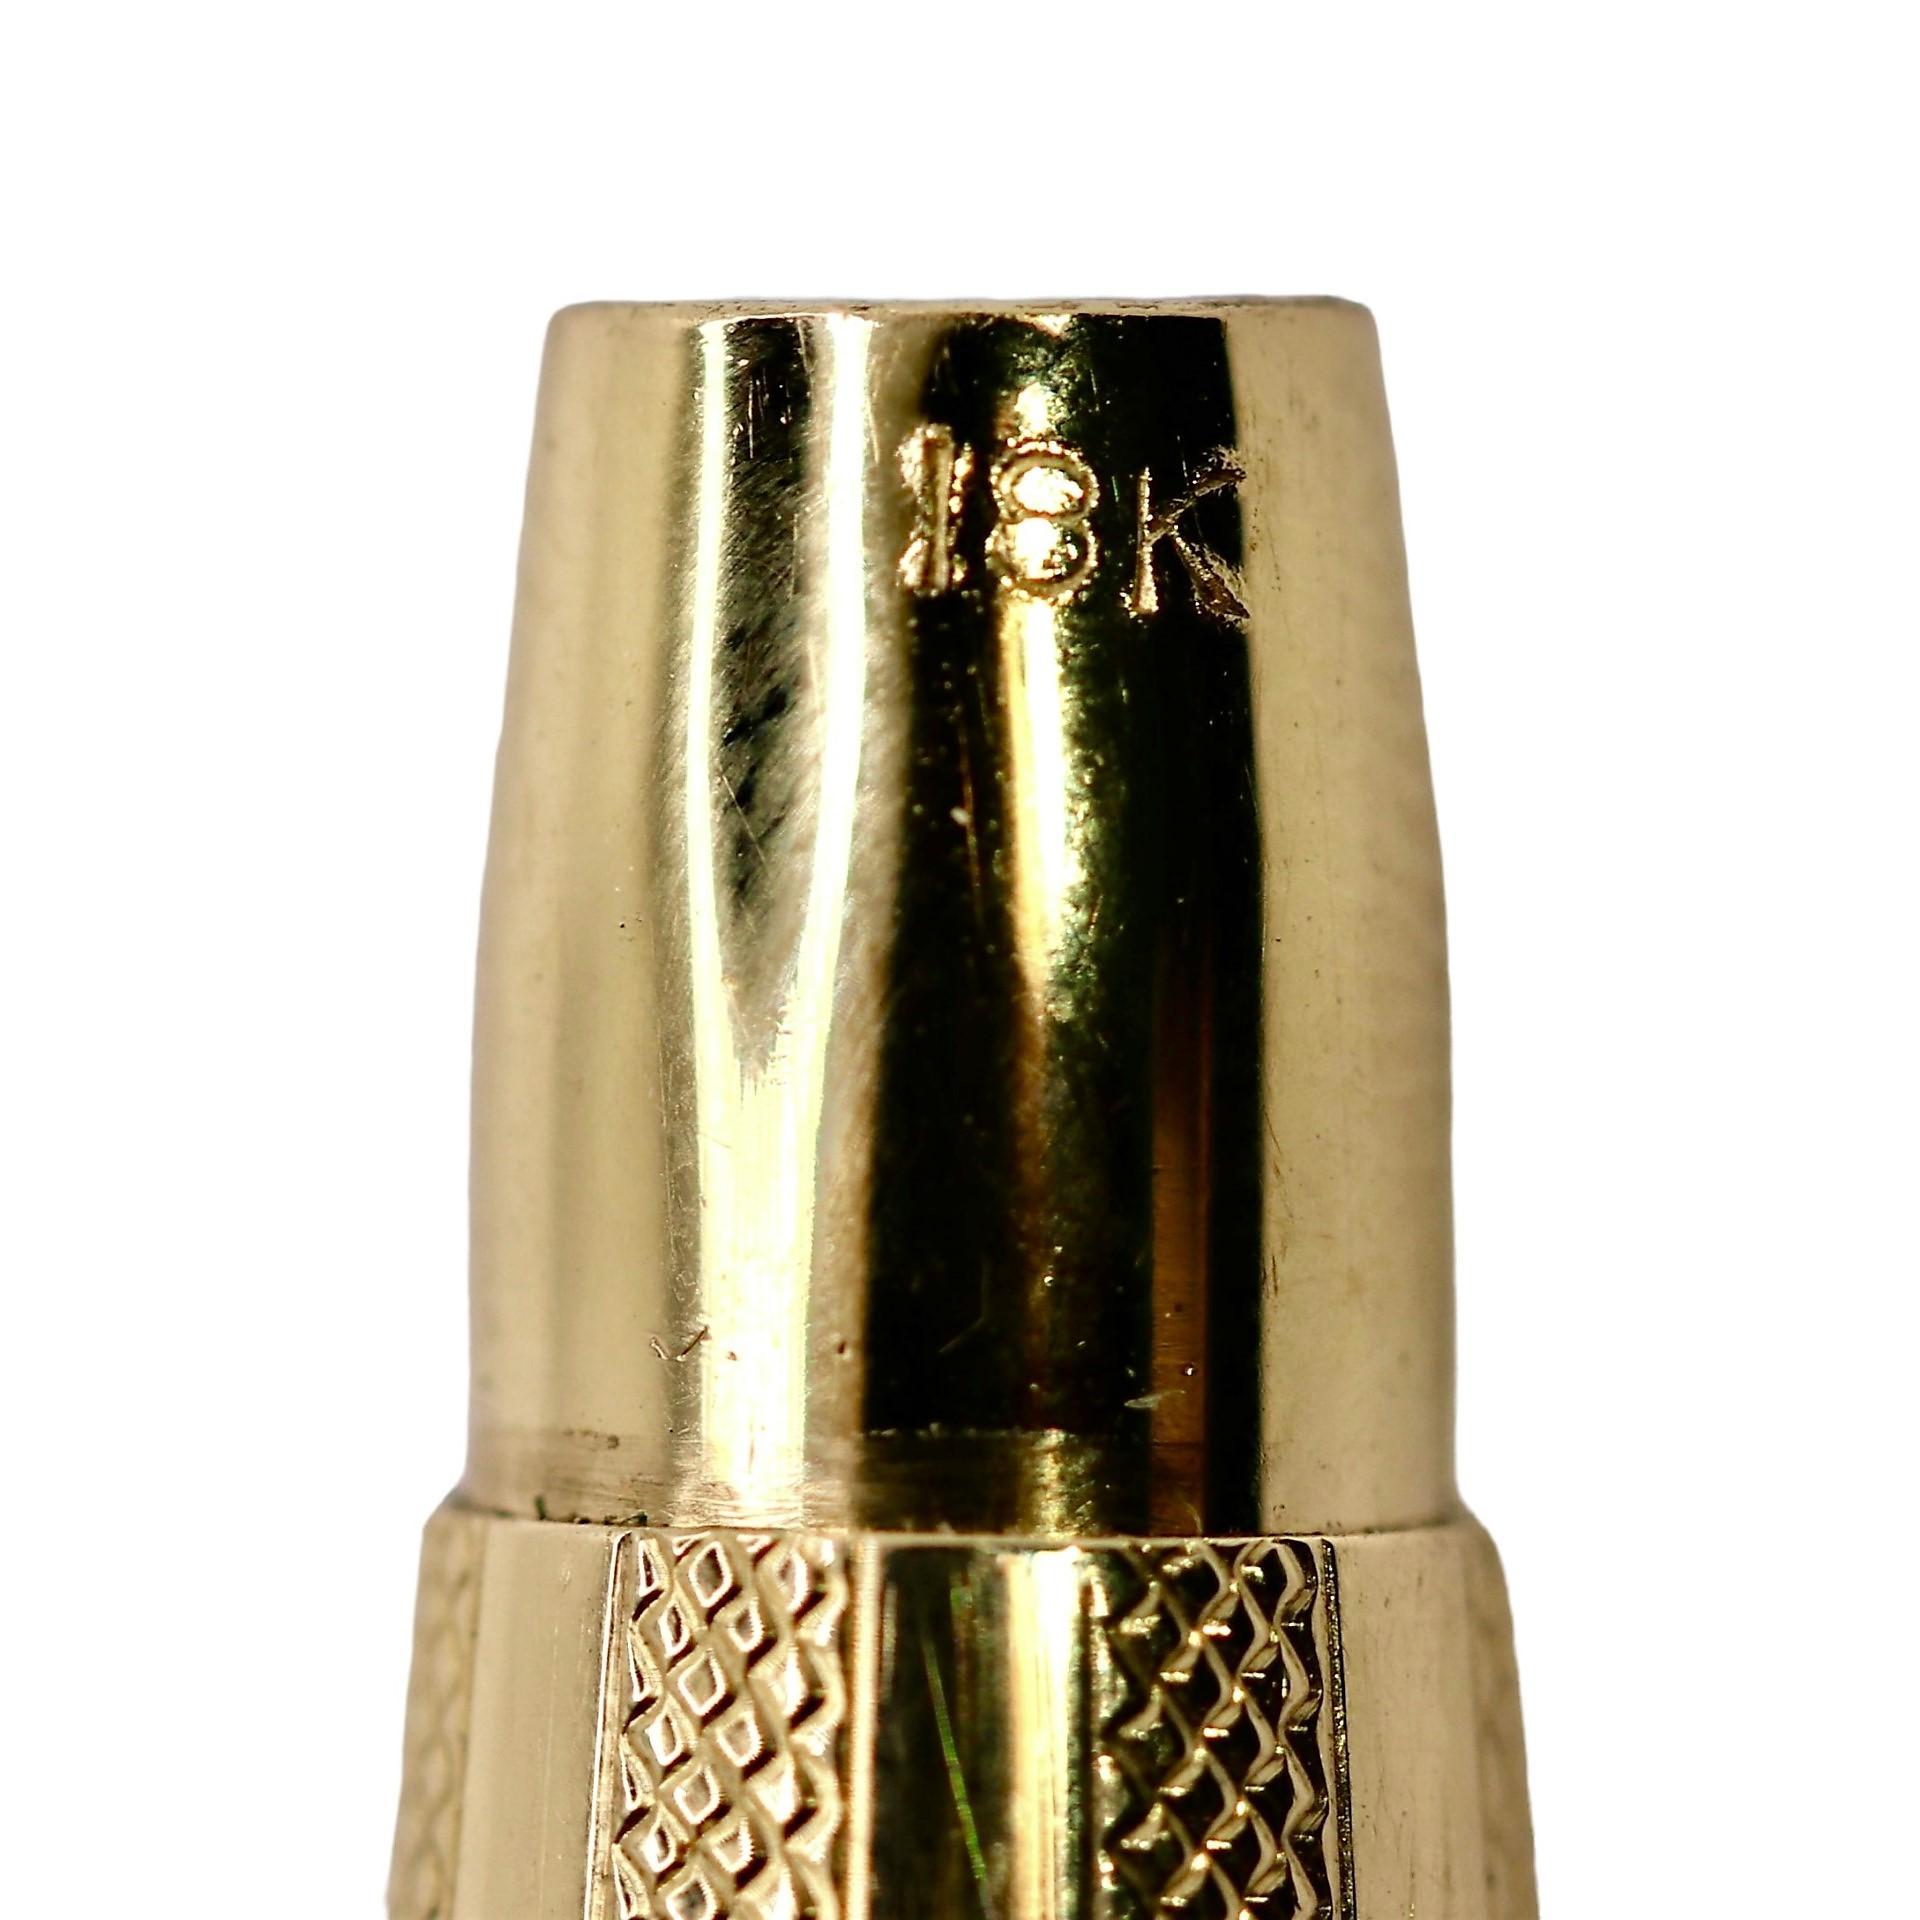  Antique Tiffany & Co 18k Gold Travel Razor & Case with Original Gillette Blades For Sale 3